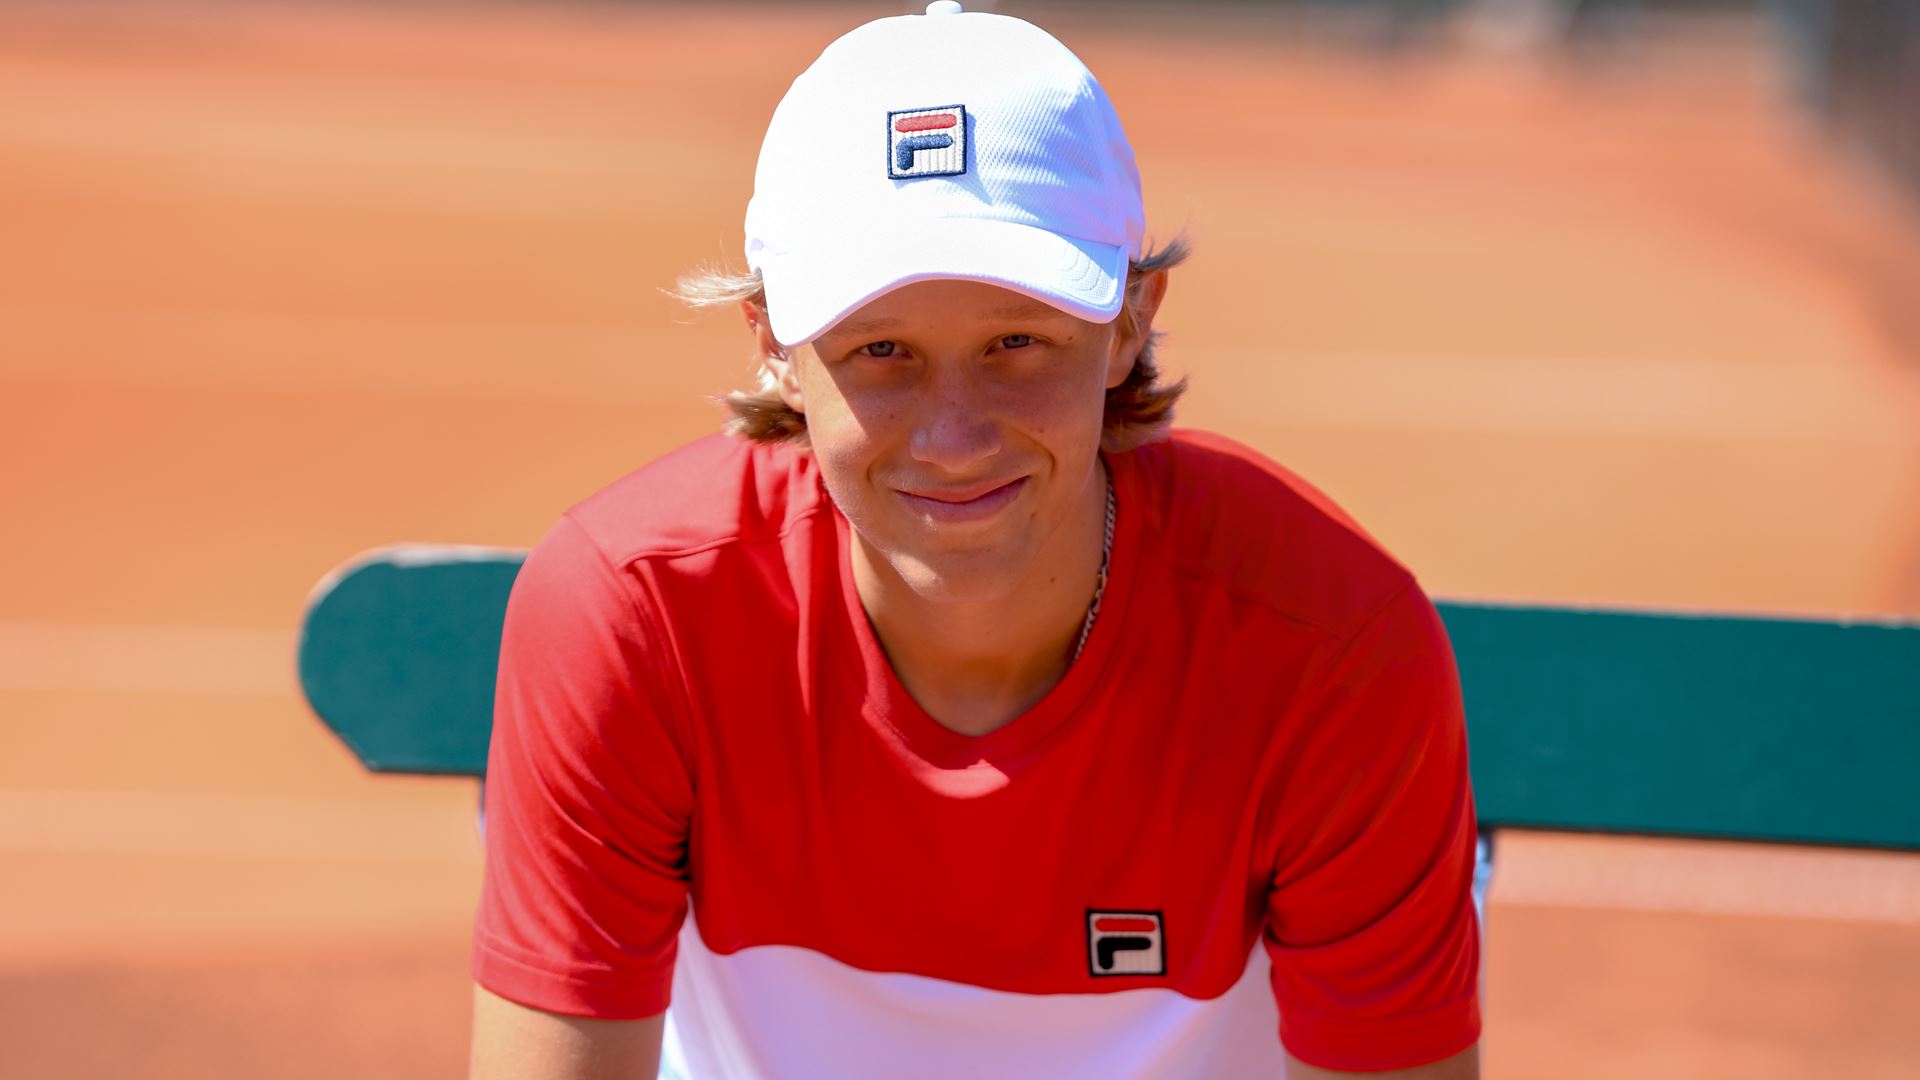 FILA Sponsors Leo Borg, Son of Tennis Legend Bjӧrn Borg